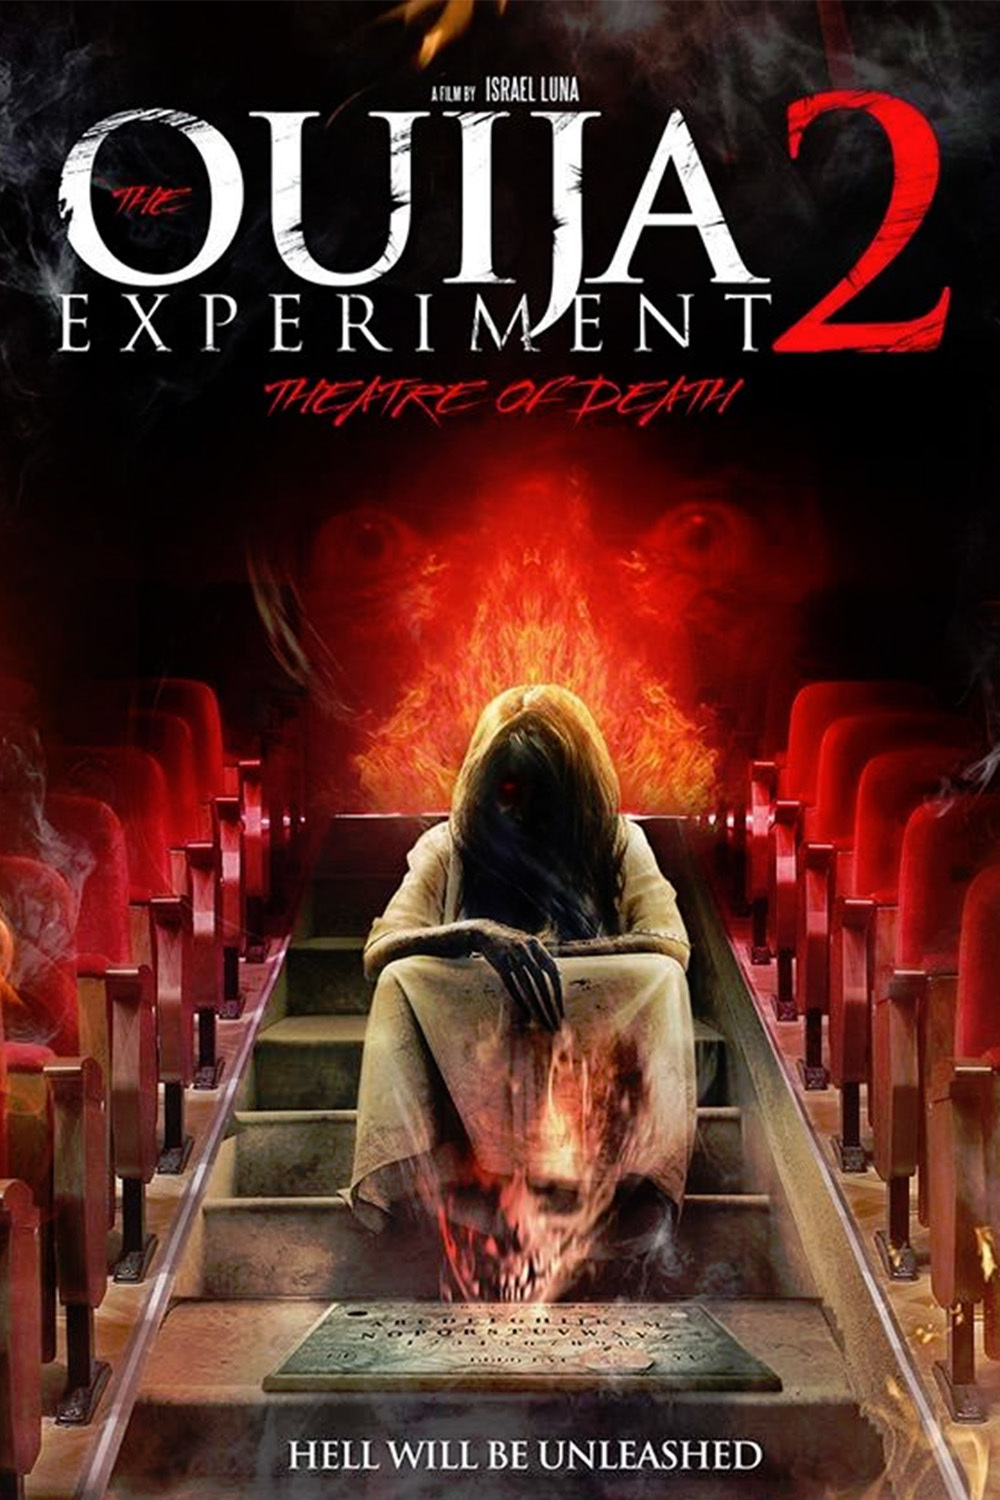 affiche du film The Ouija Experiment 2: Theatre of Death